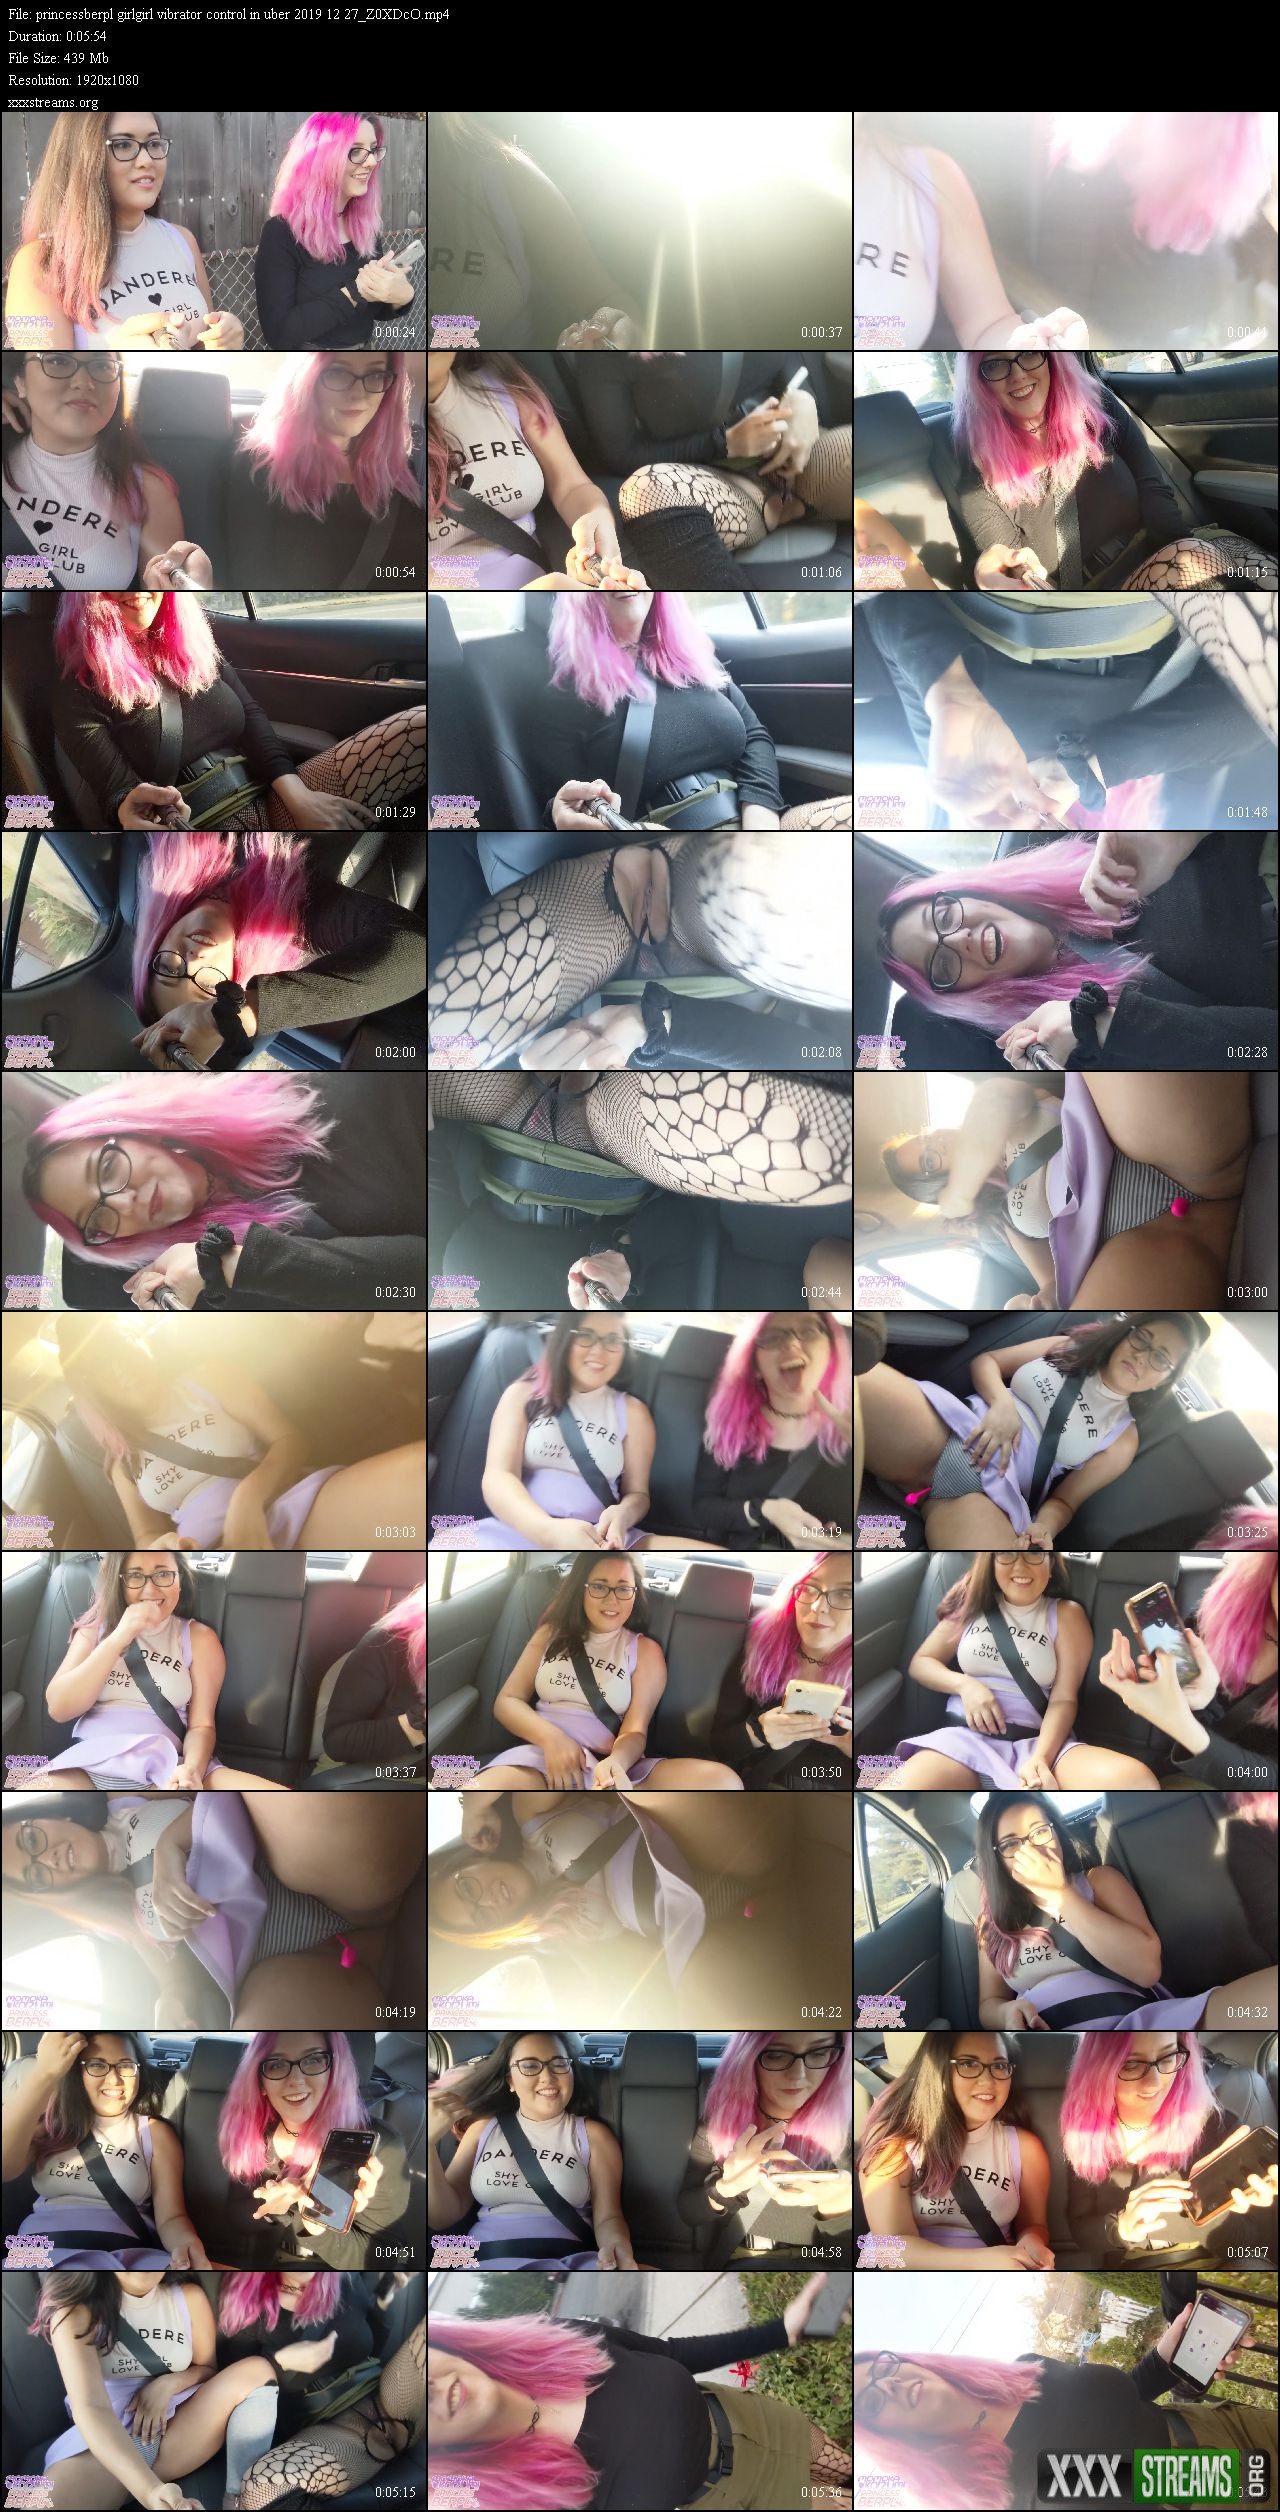 princessberpl &#8211; Girl/Girl Vibrator Control In Uber &#8211; manyvids